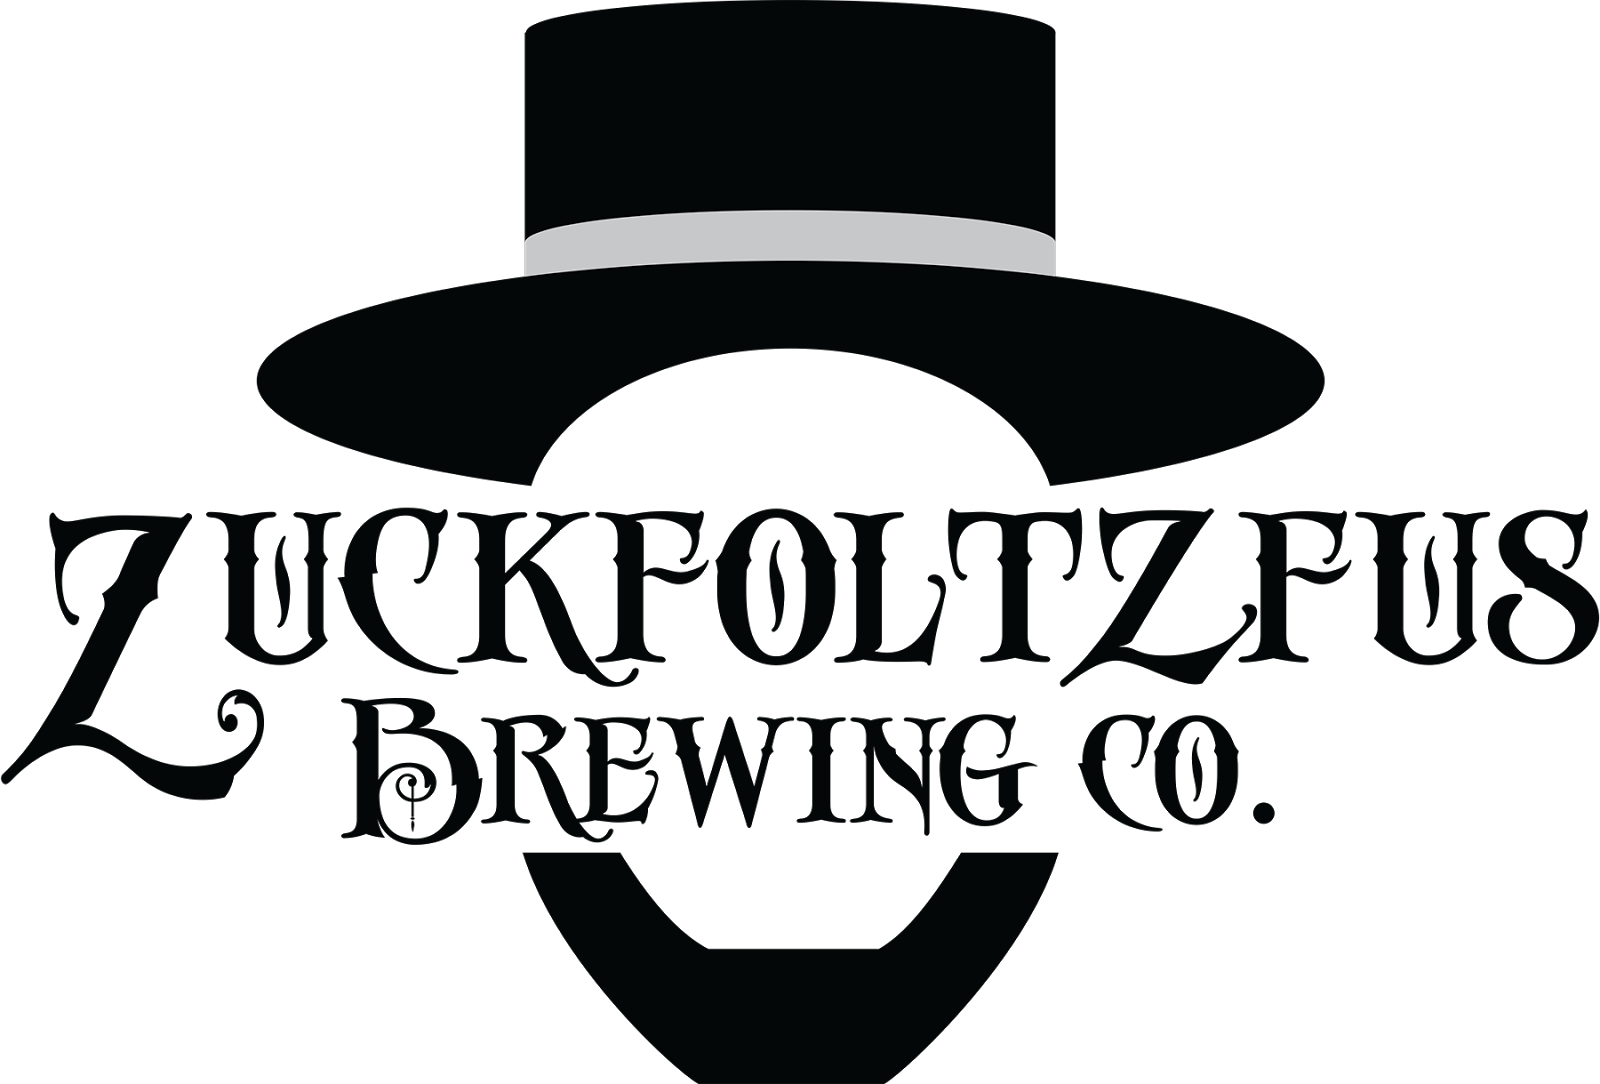 Zuckfoltzfus Brewing Co.